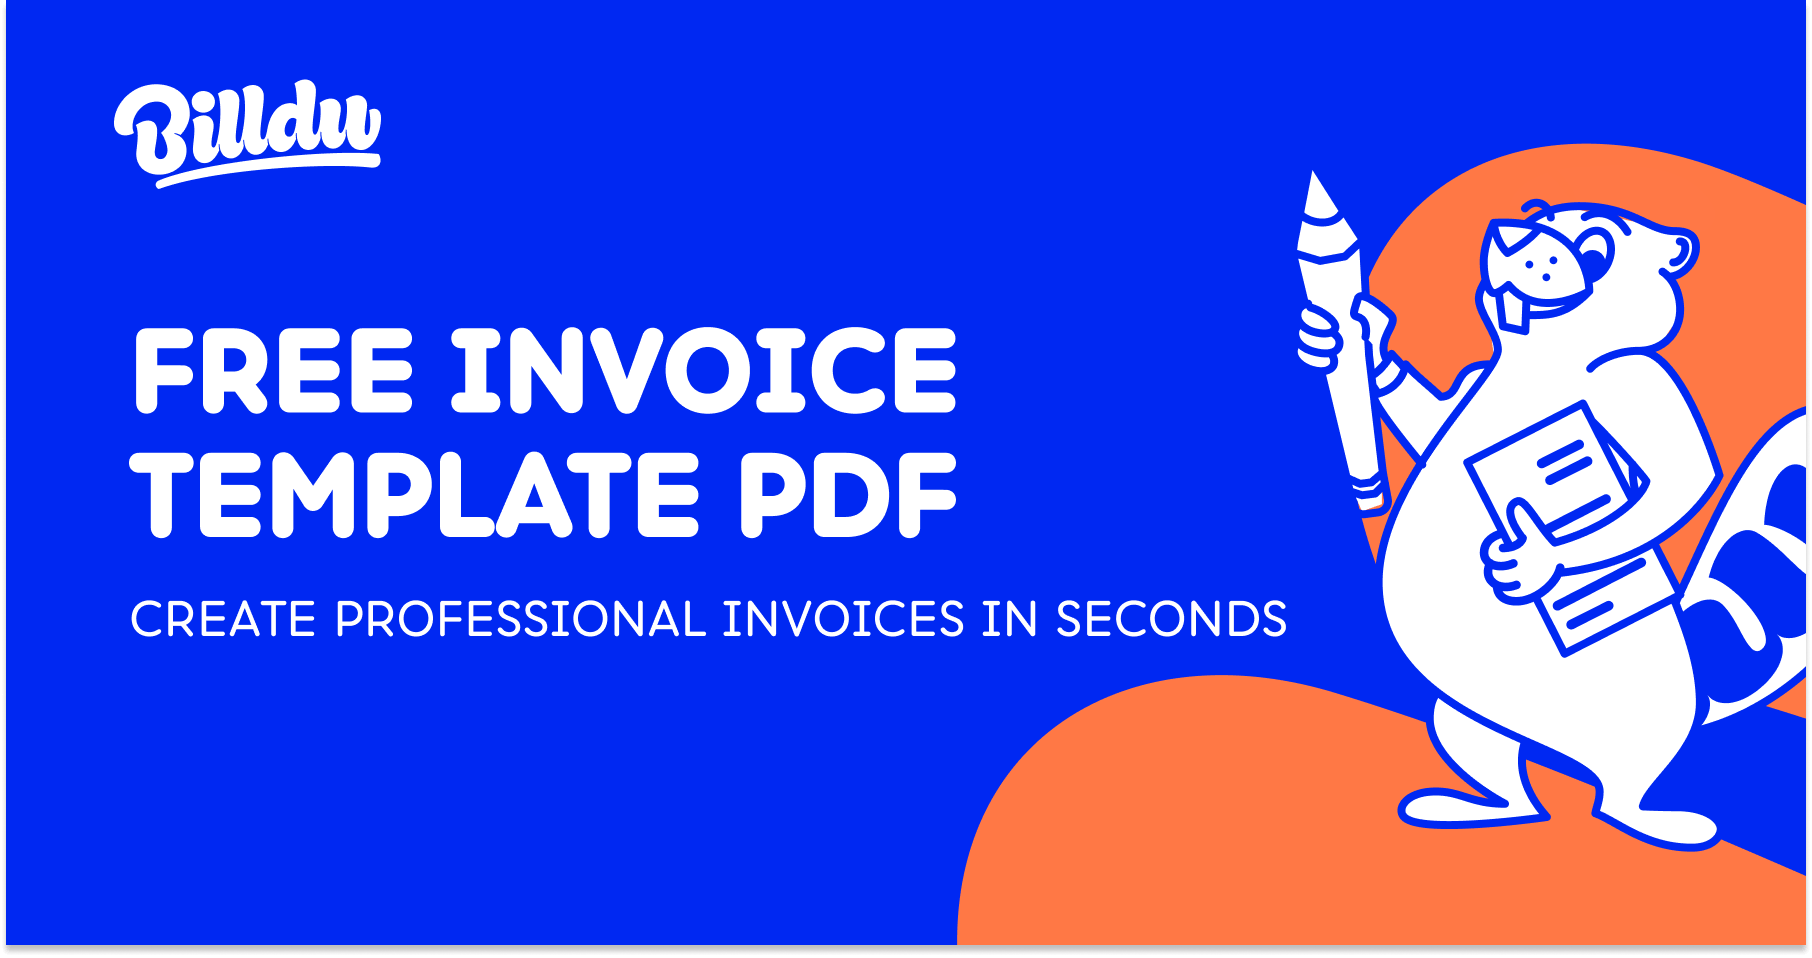 pdf-invoice-templates-free-download-billdu